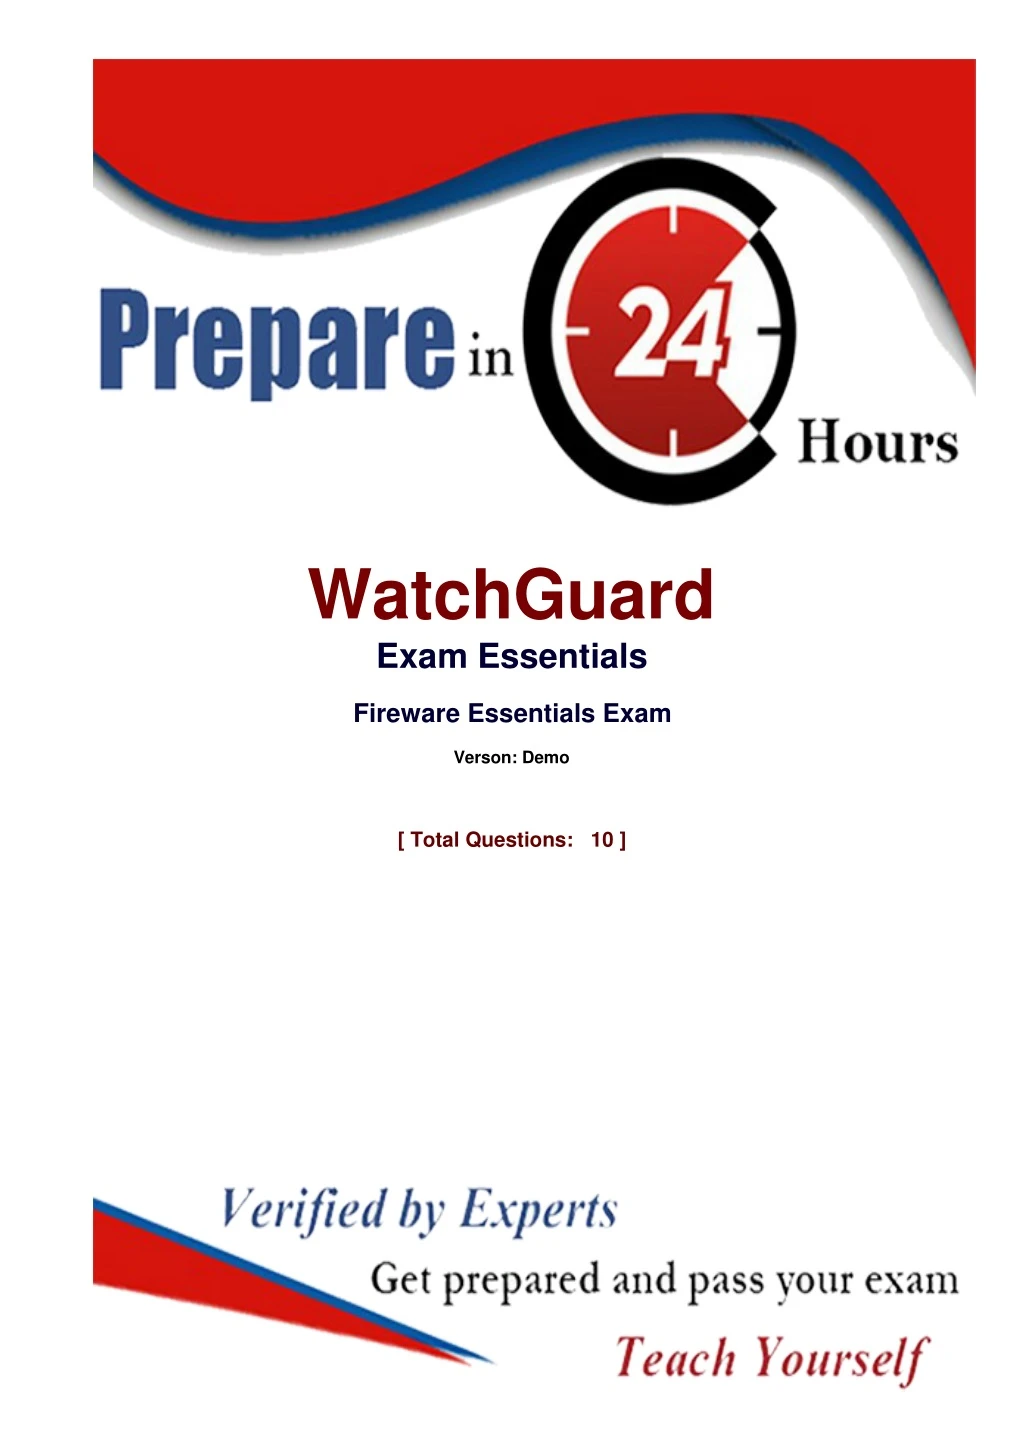 watchguard exam essentials